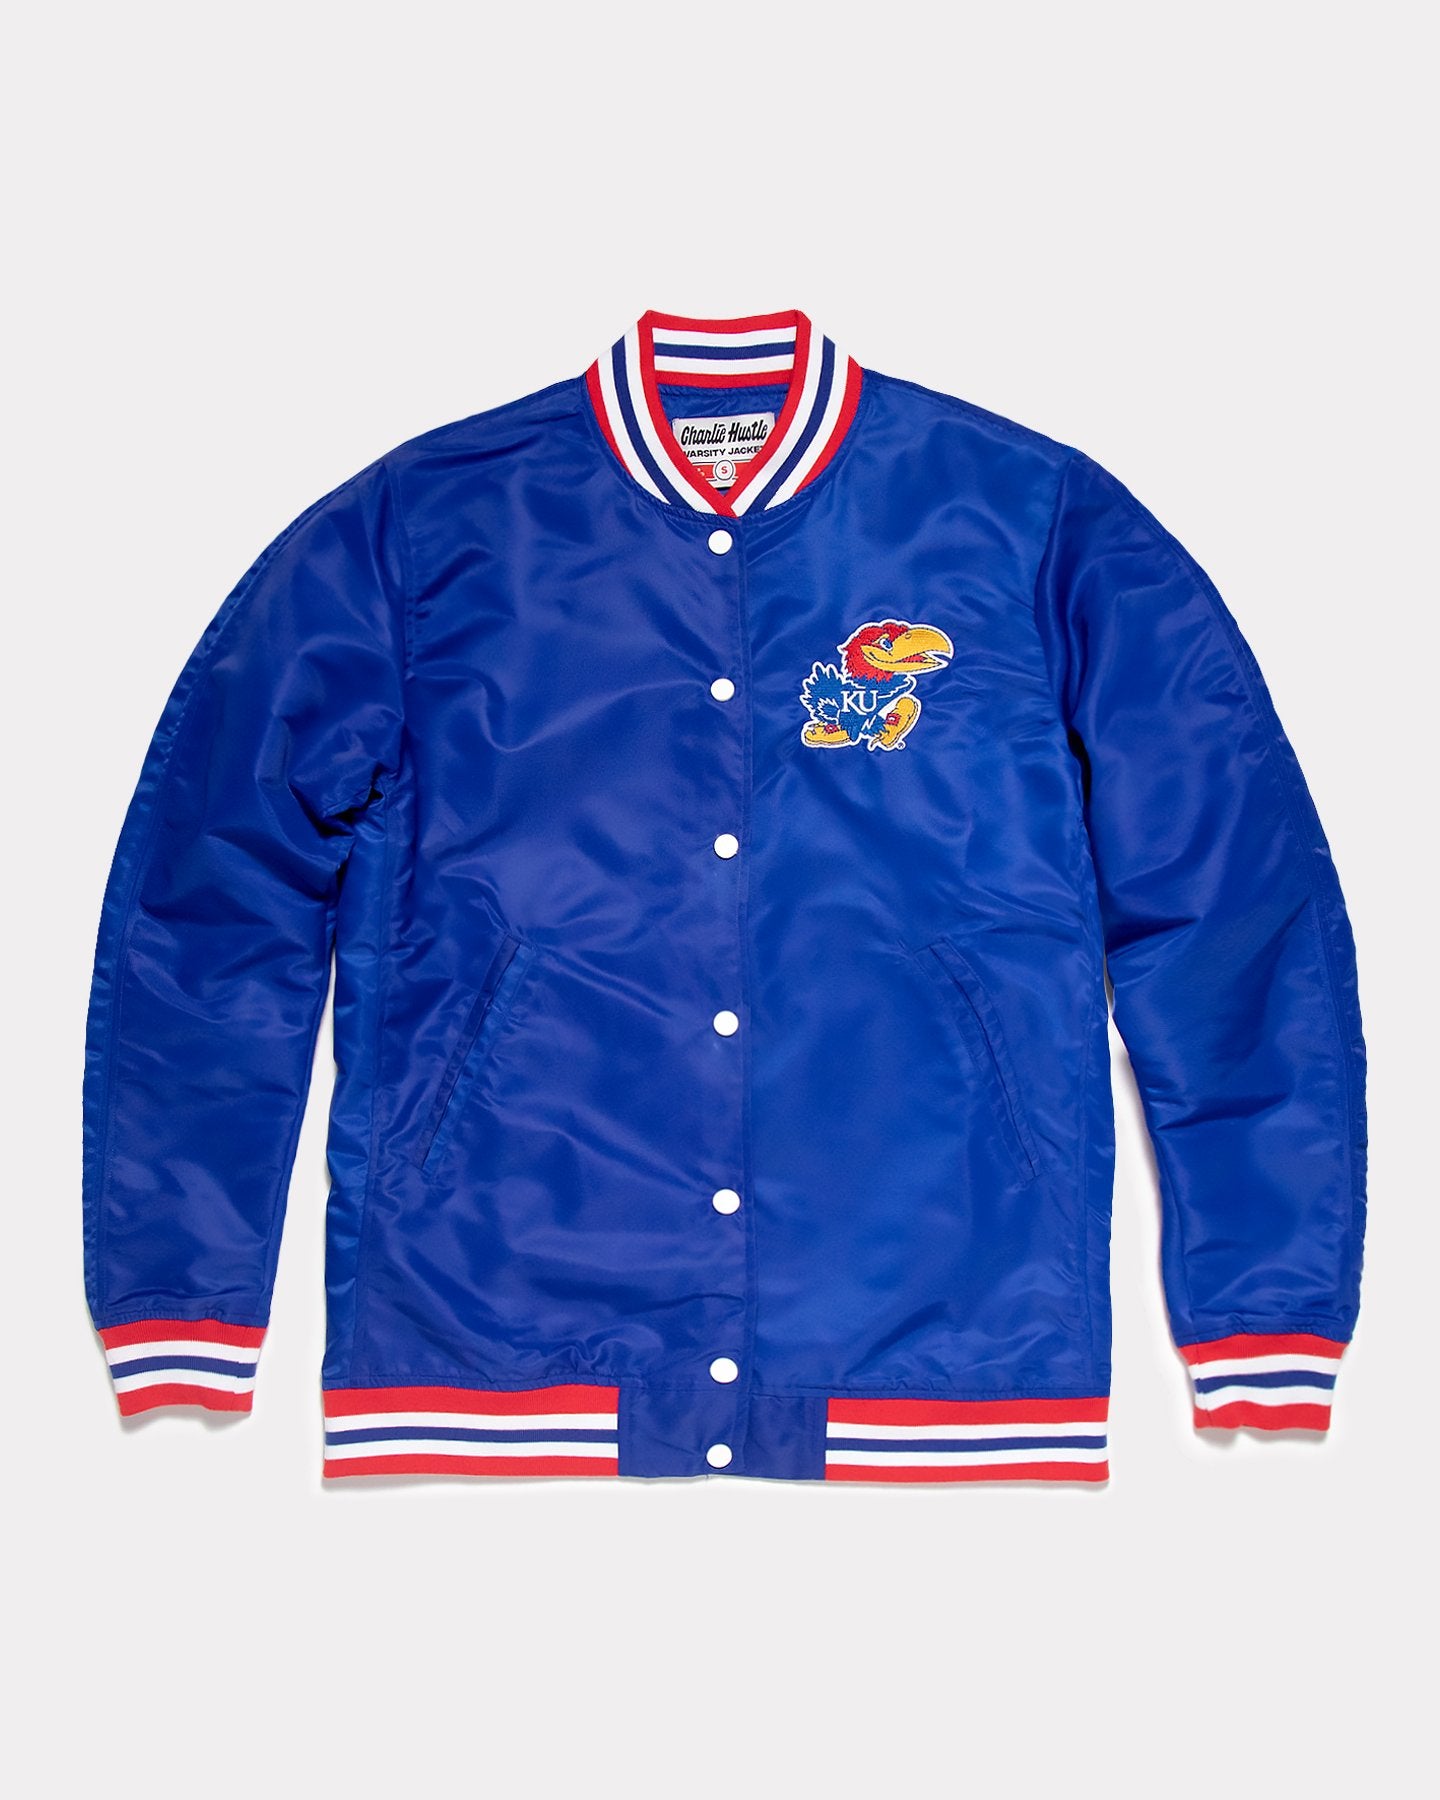 University of Kansas Vintage Blue Varsity Jacket | CHARLIE HUSTLE